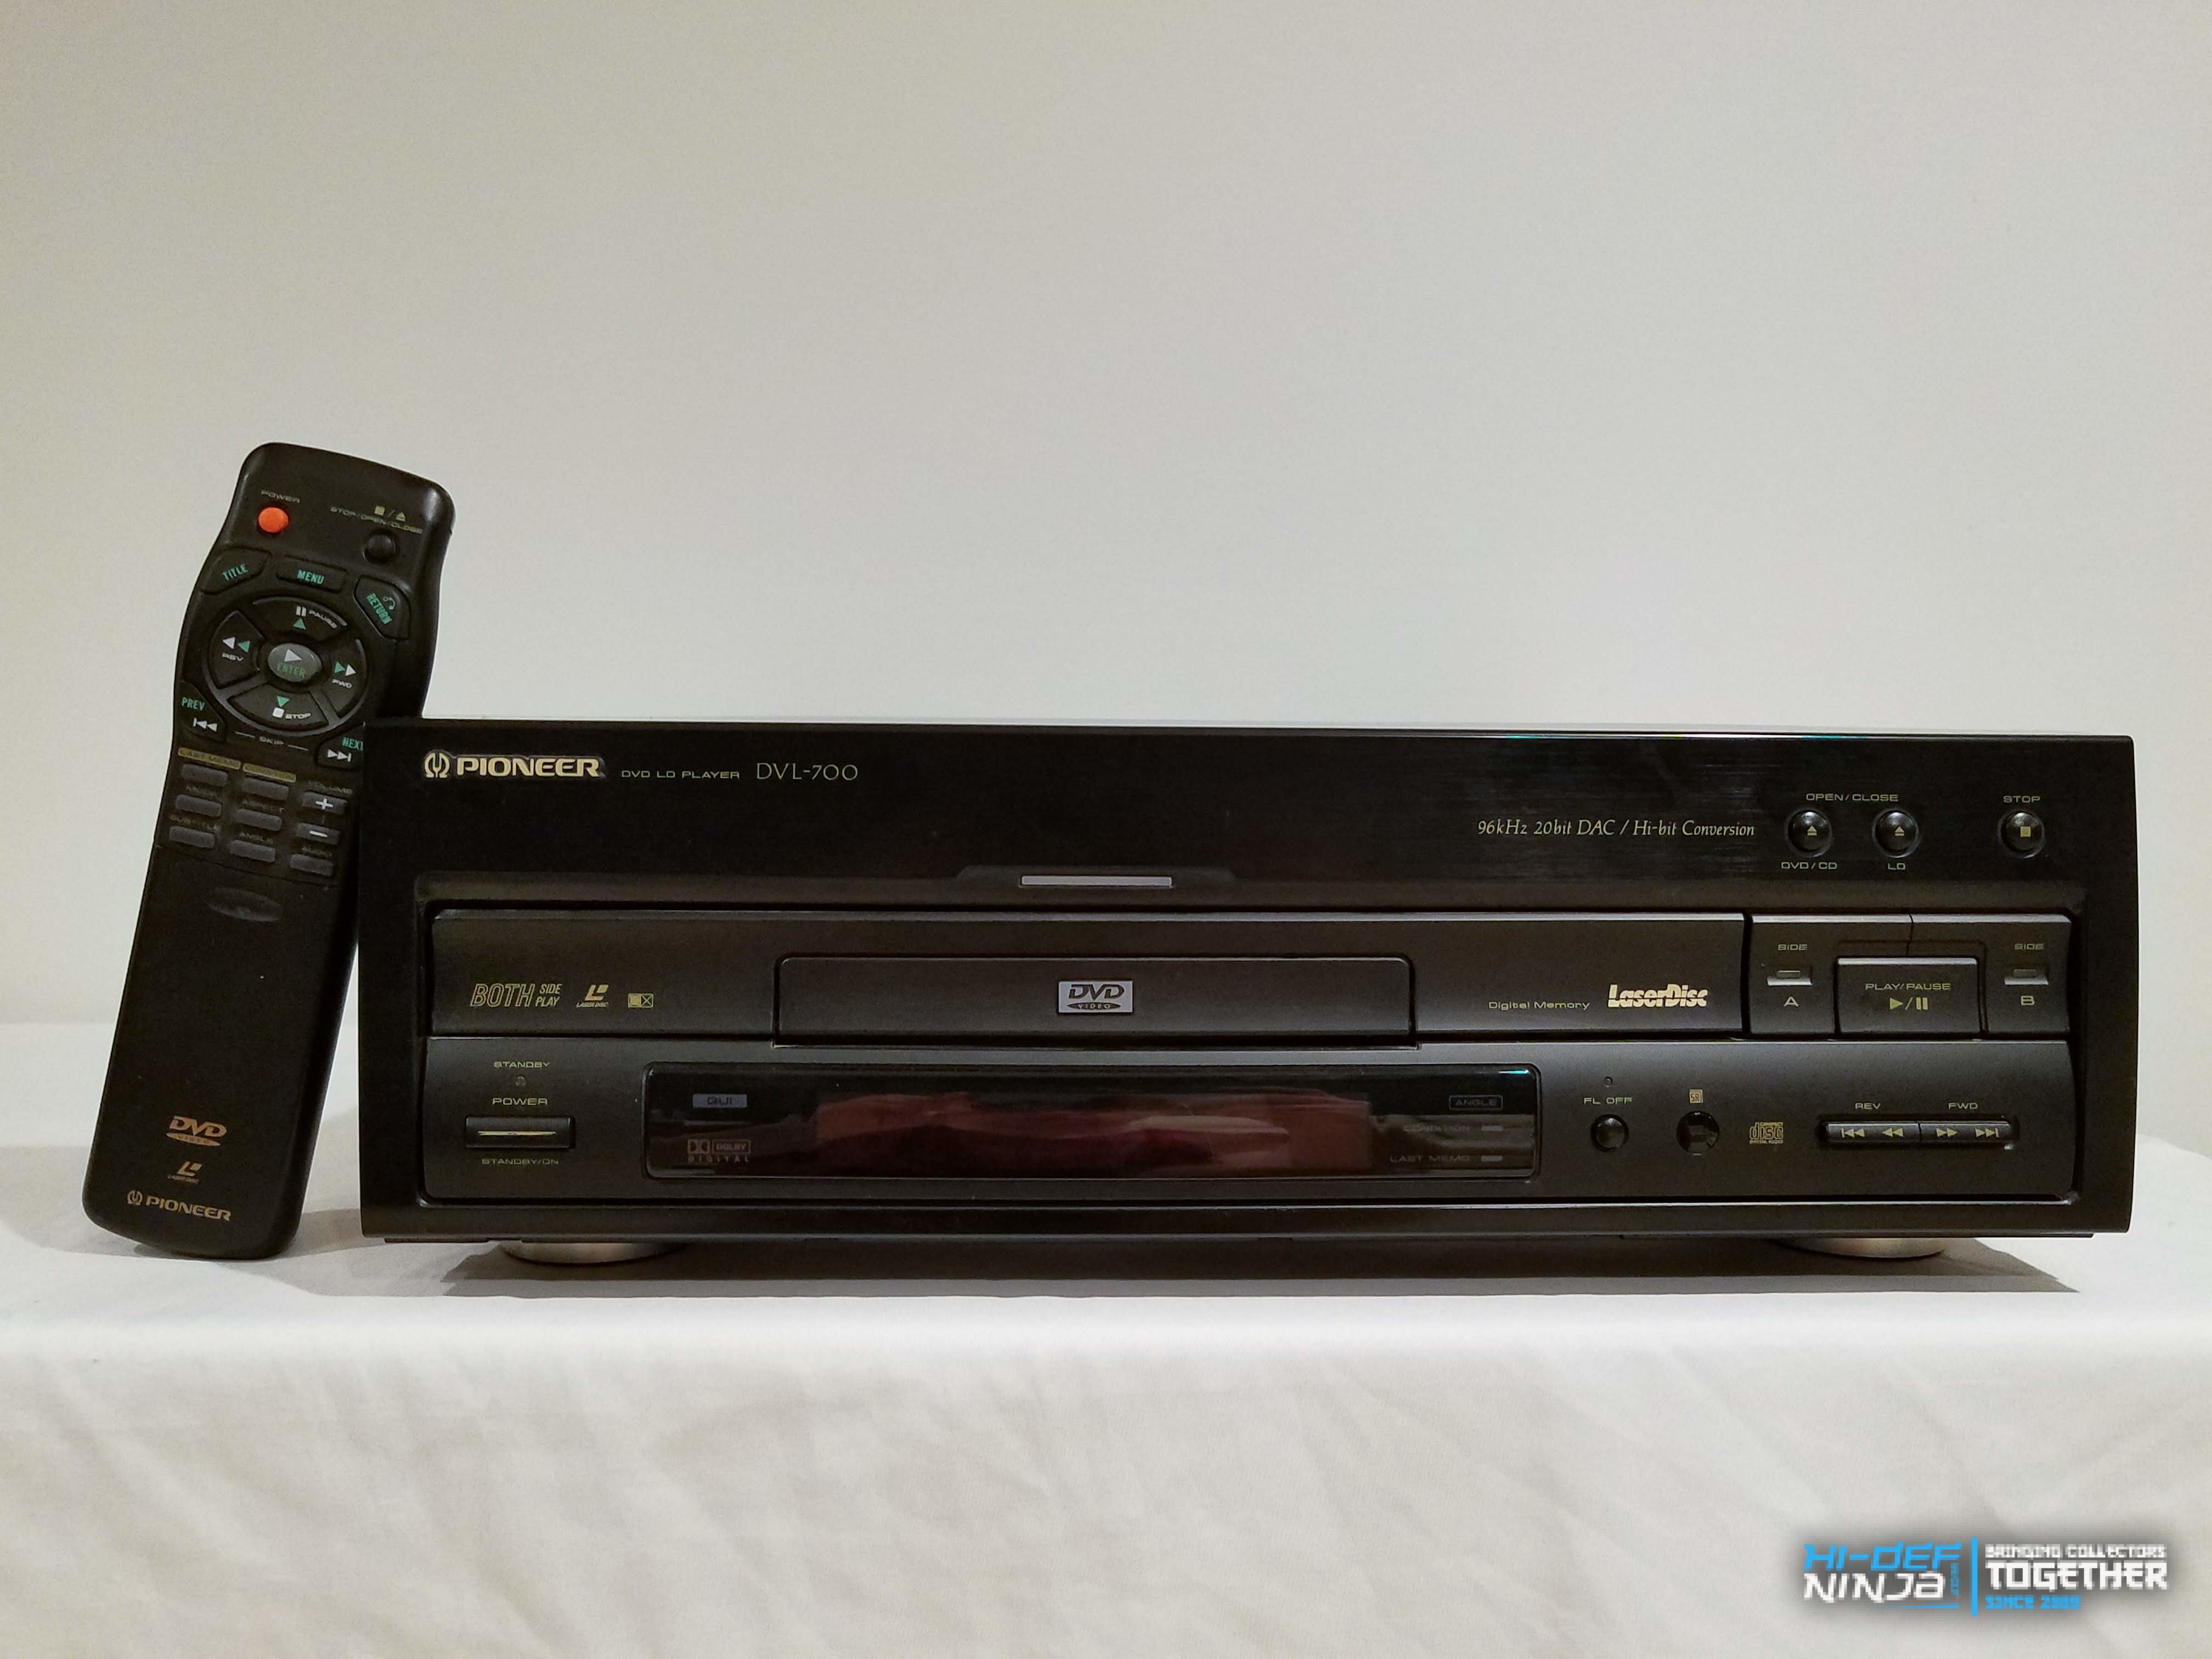 DVL-700 Laserdisc Player